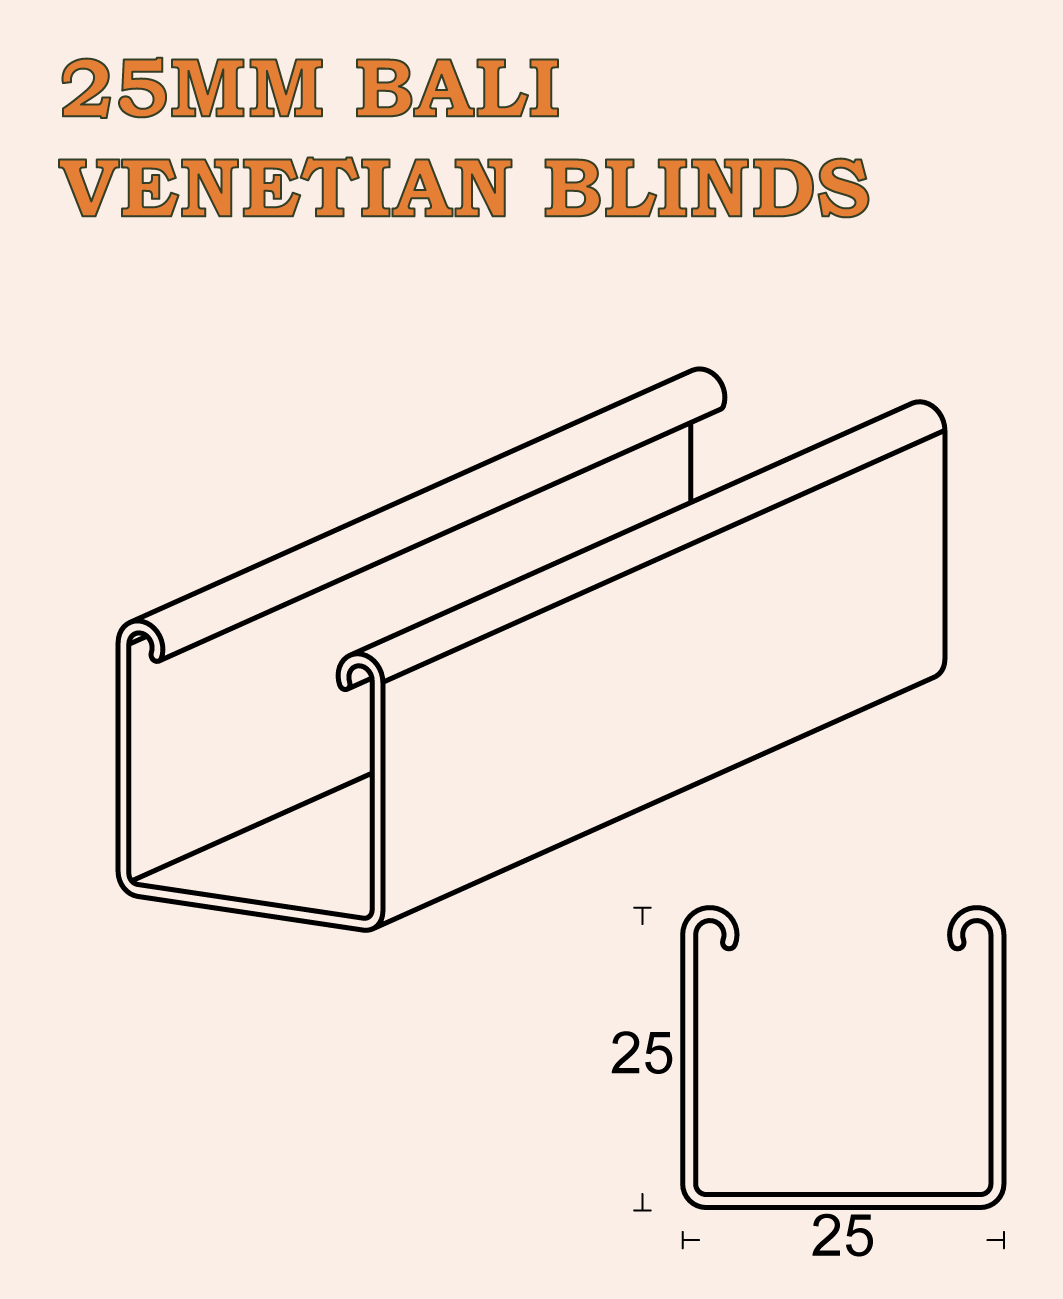 25MM BALI VENETIAN BLINDS